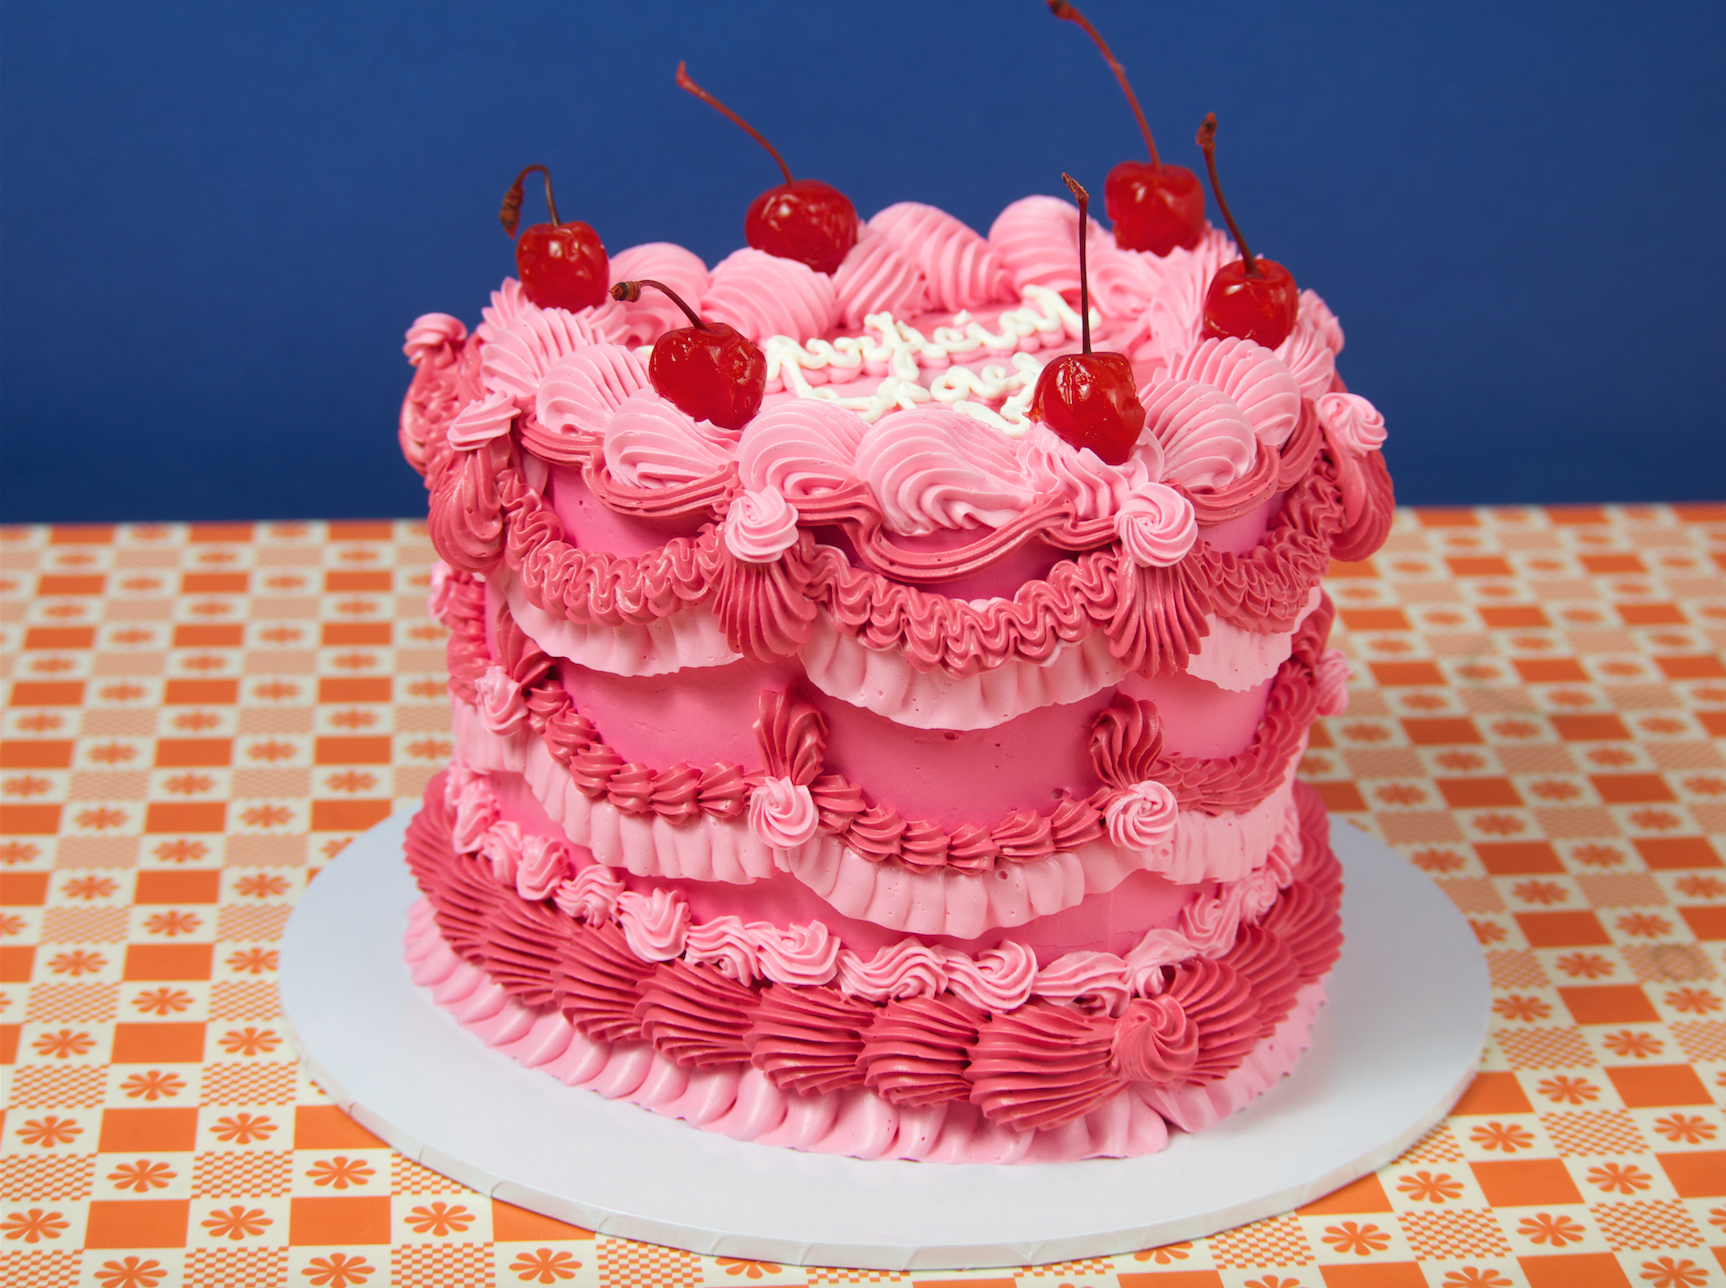 Vintage Cake Decorating - Baking Butterly Love